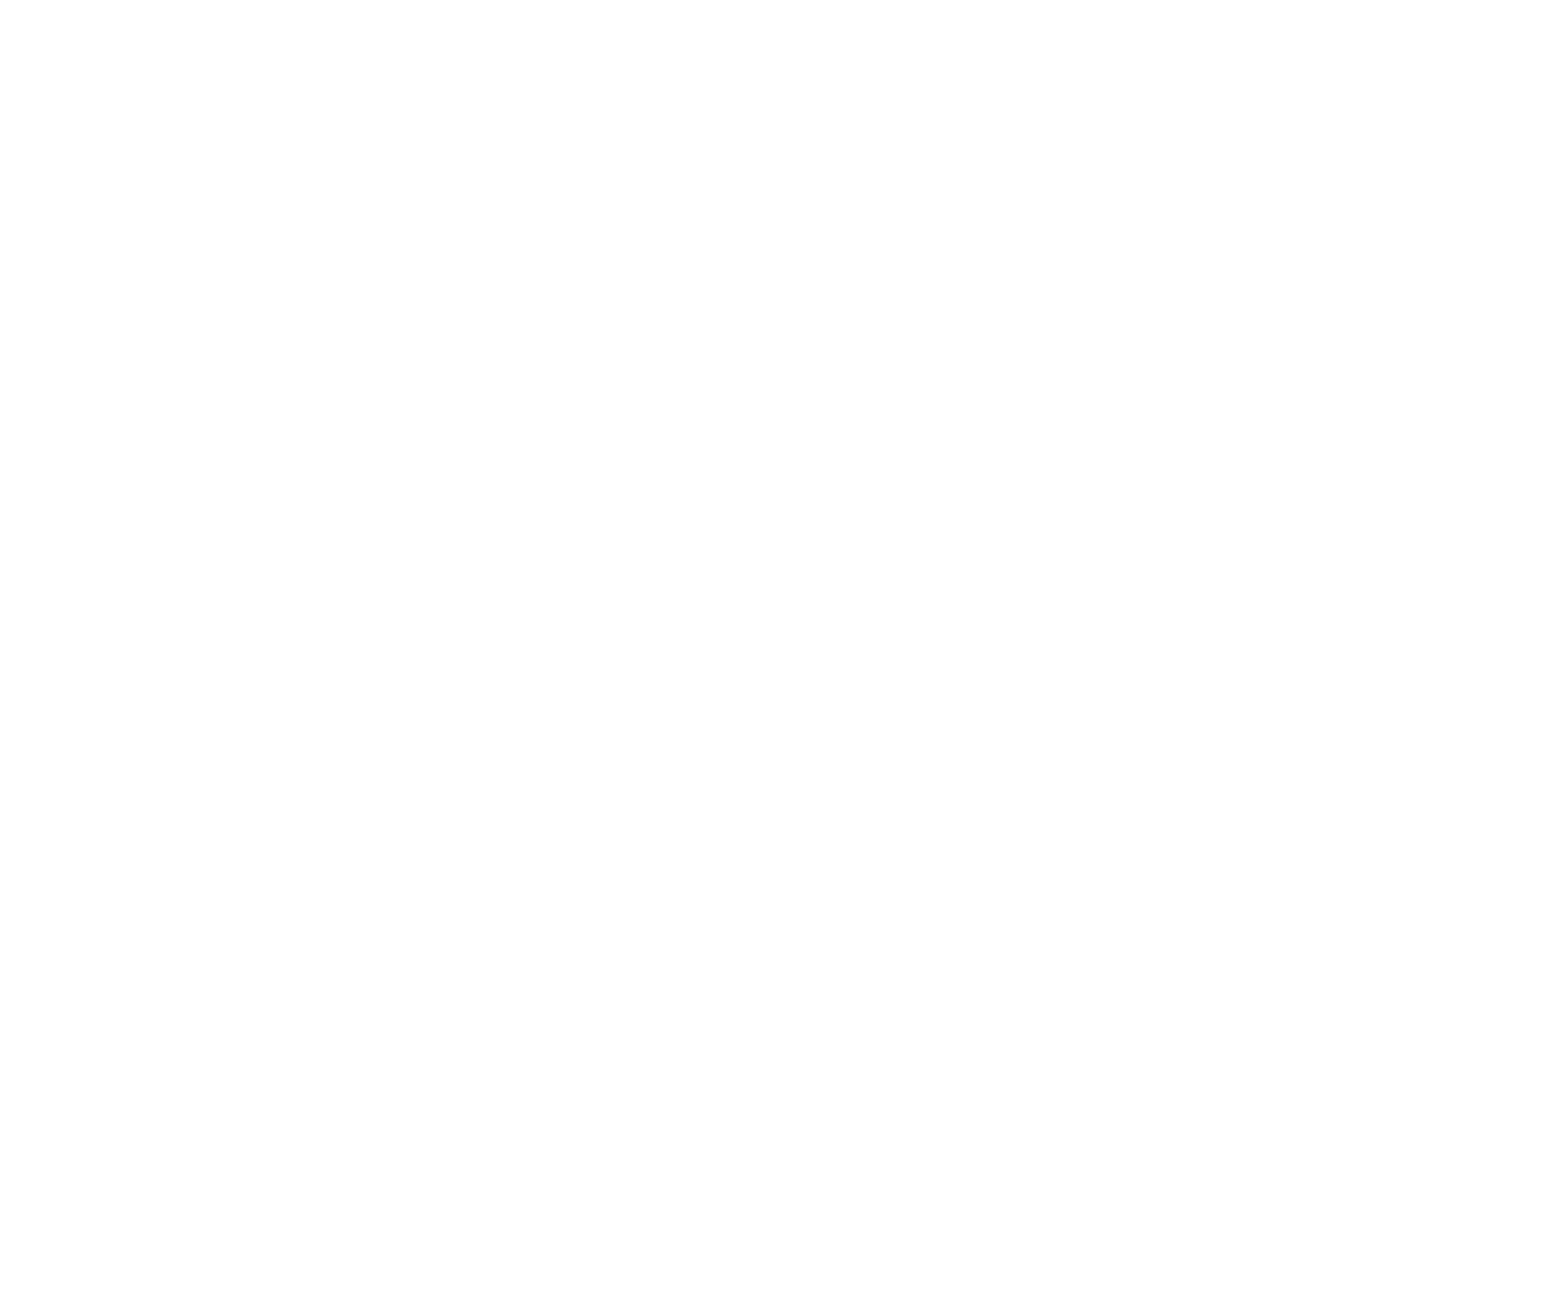 York Water logo large for dark backgrounds (transparent PNG)